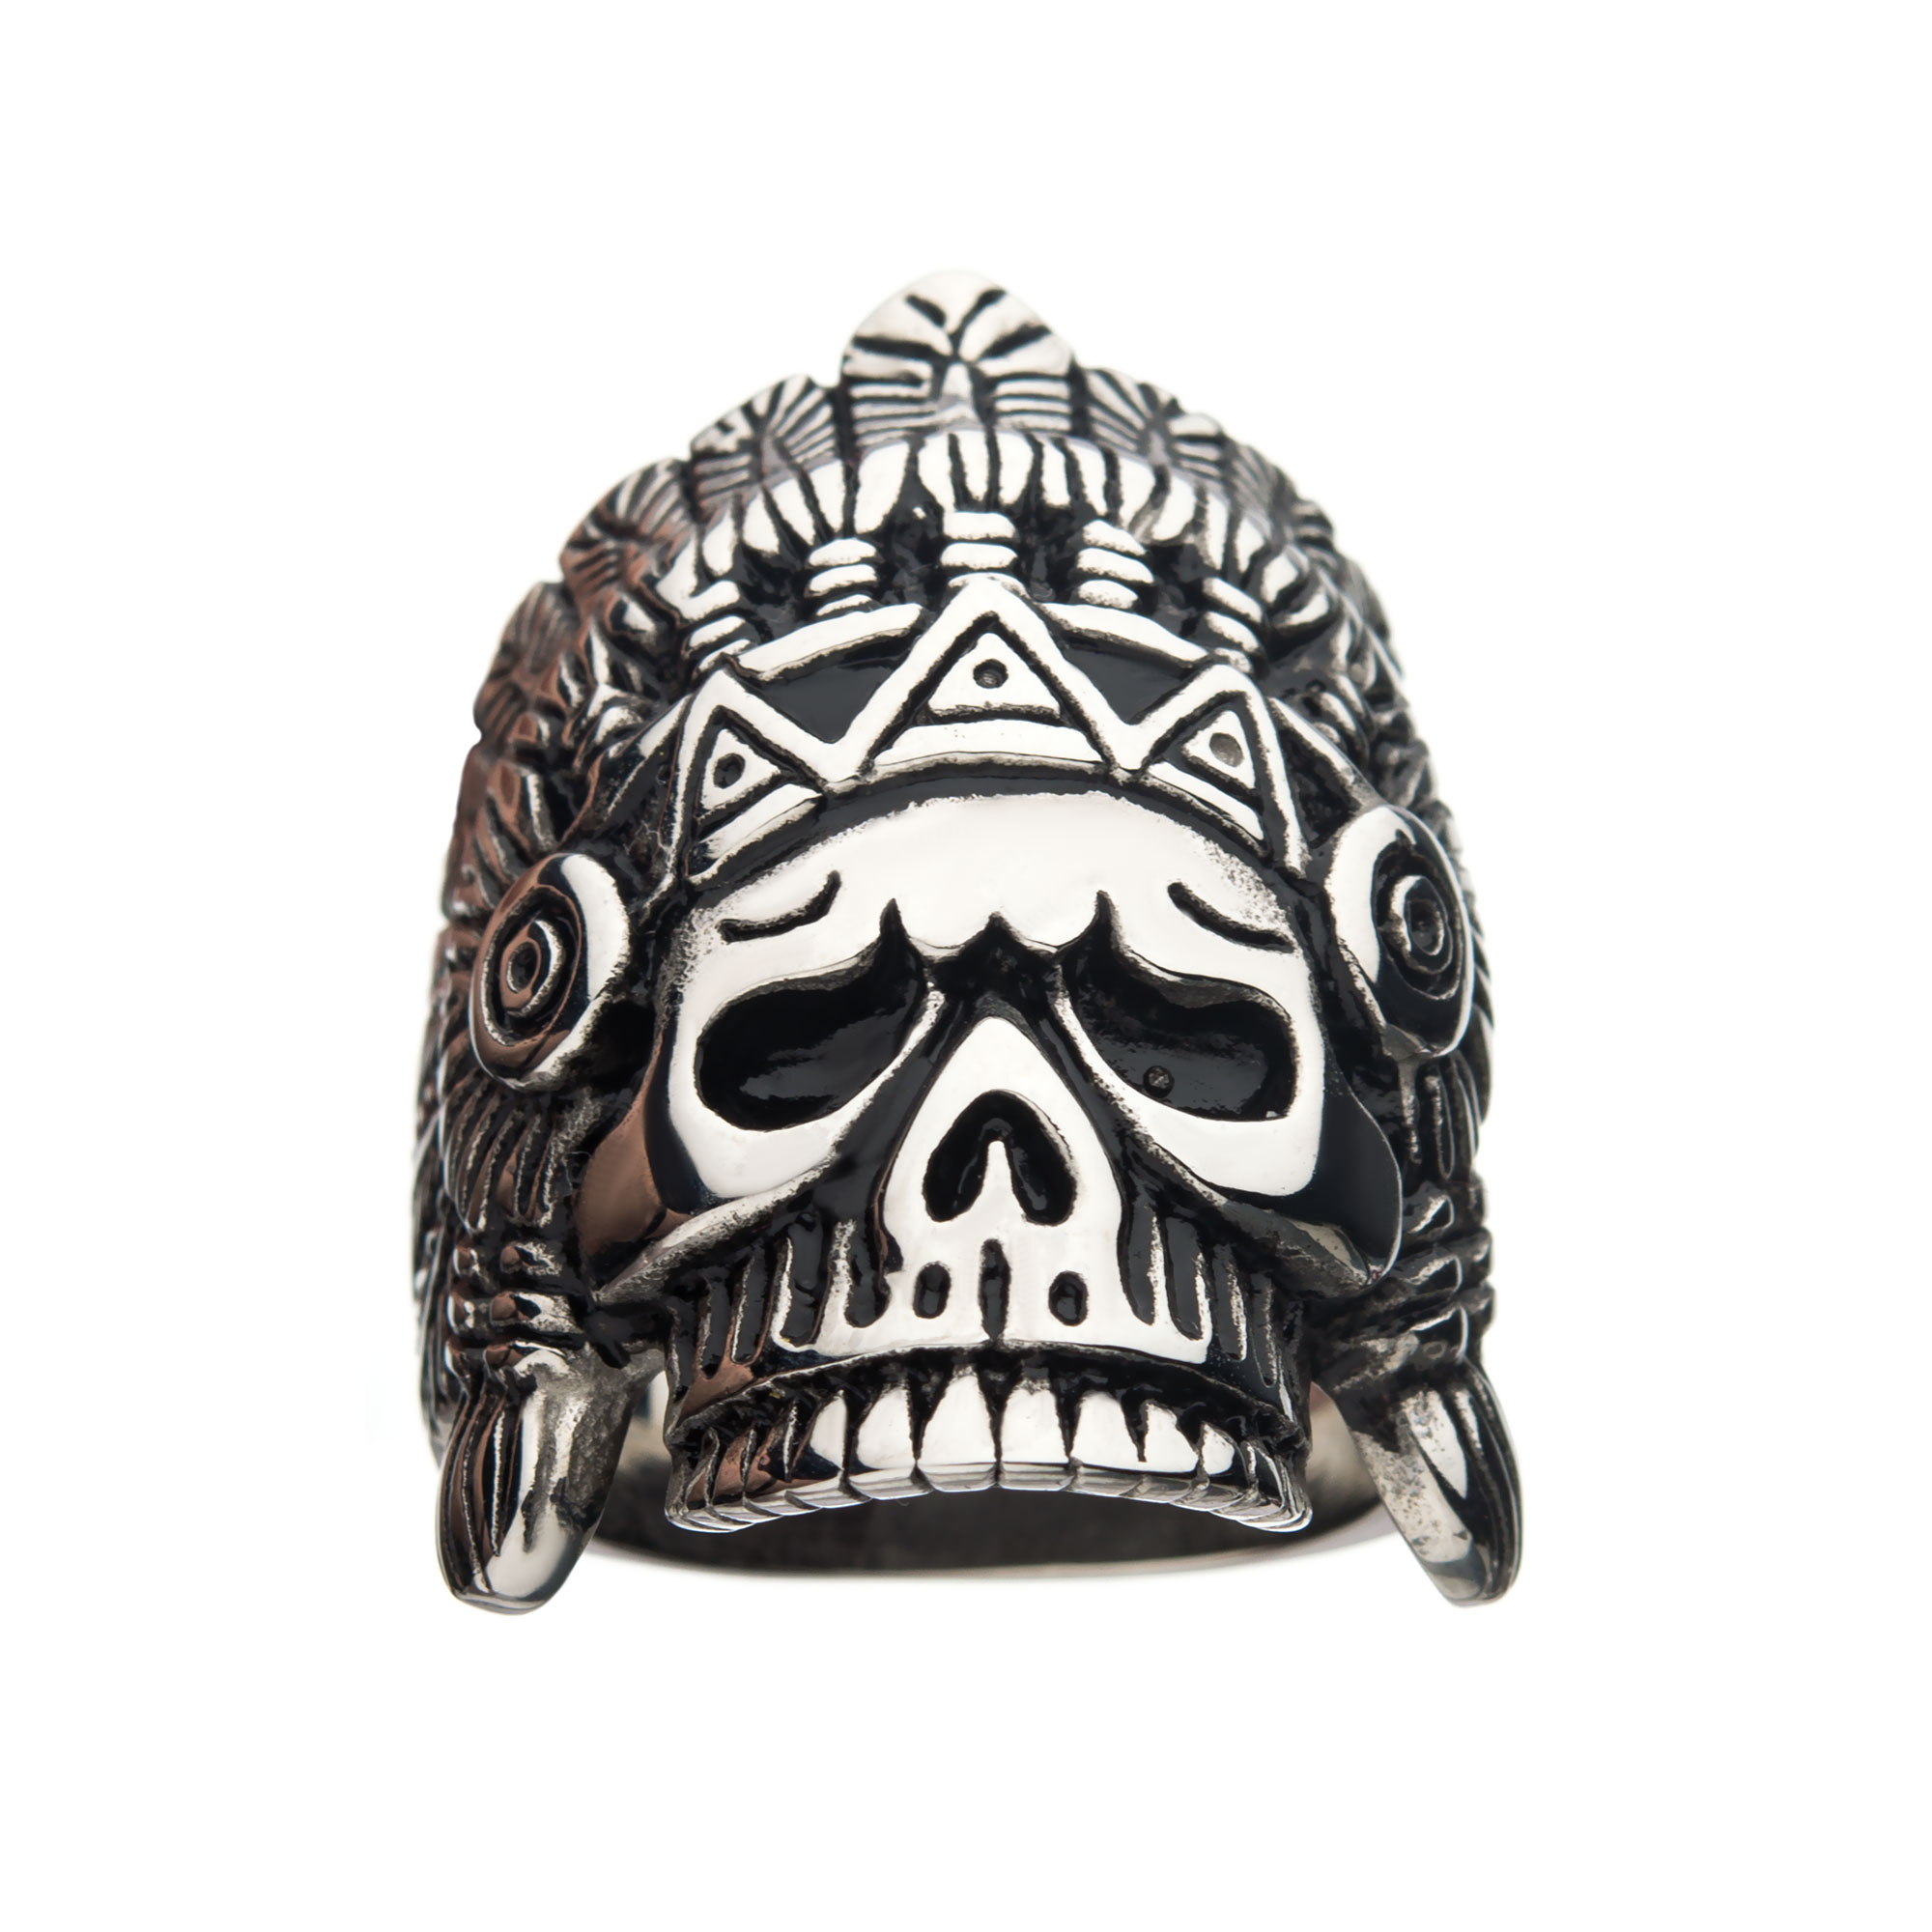 Oxidized Stainless Steel Chief Skull Ring Image 2 Midtown Diamonds Reno, NV